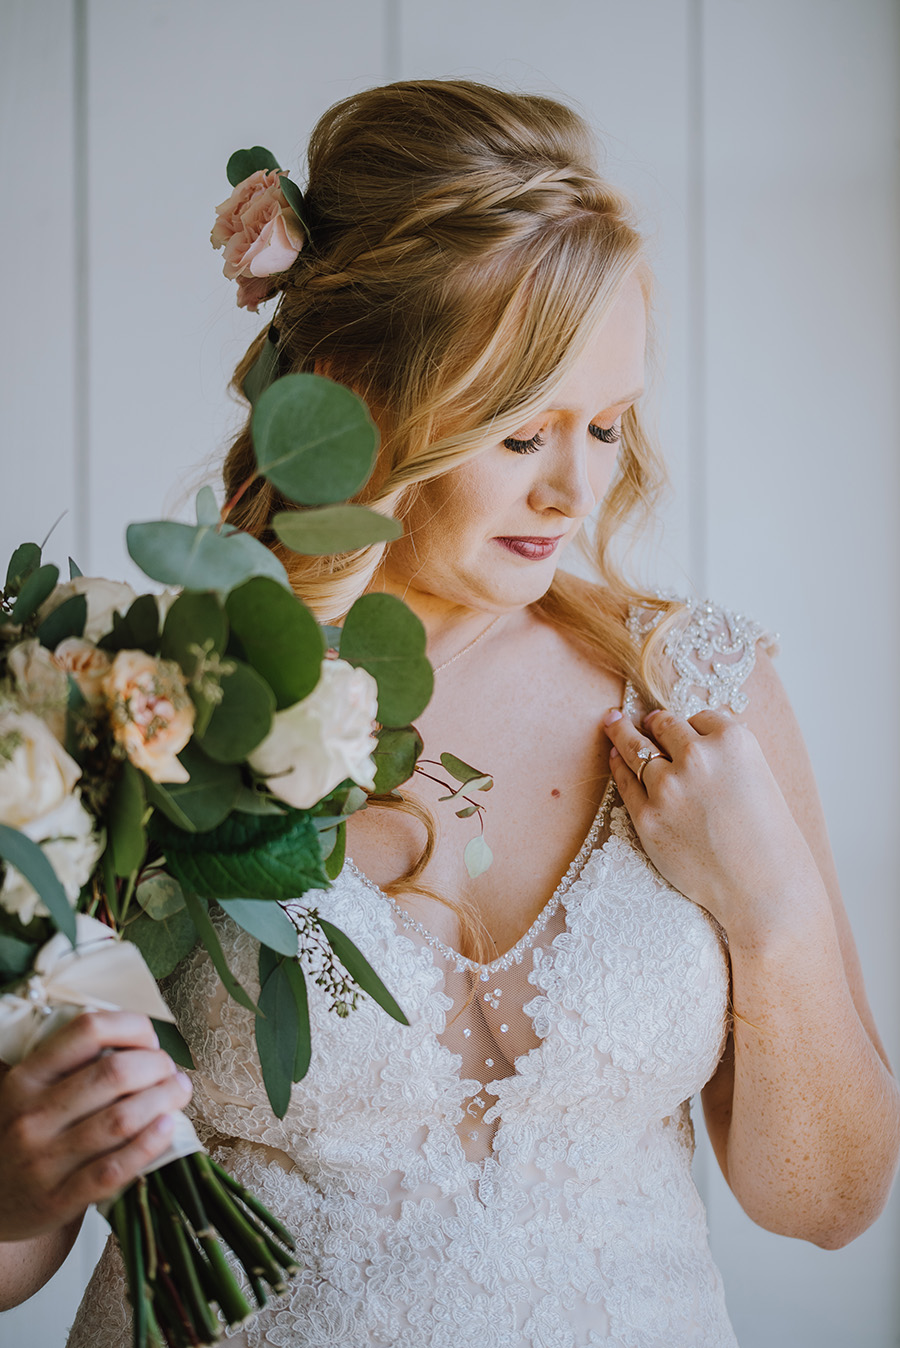 Gorgeous Lace Wedding Gown - The Grand Ivory Wedding - Leonard, Texas Wedding Venue